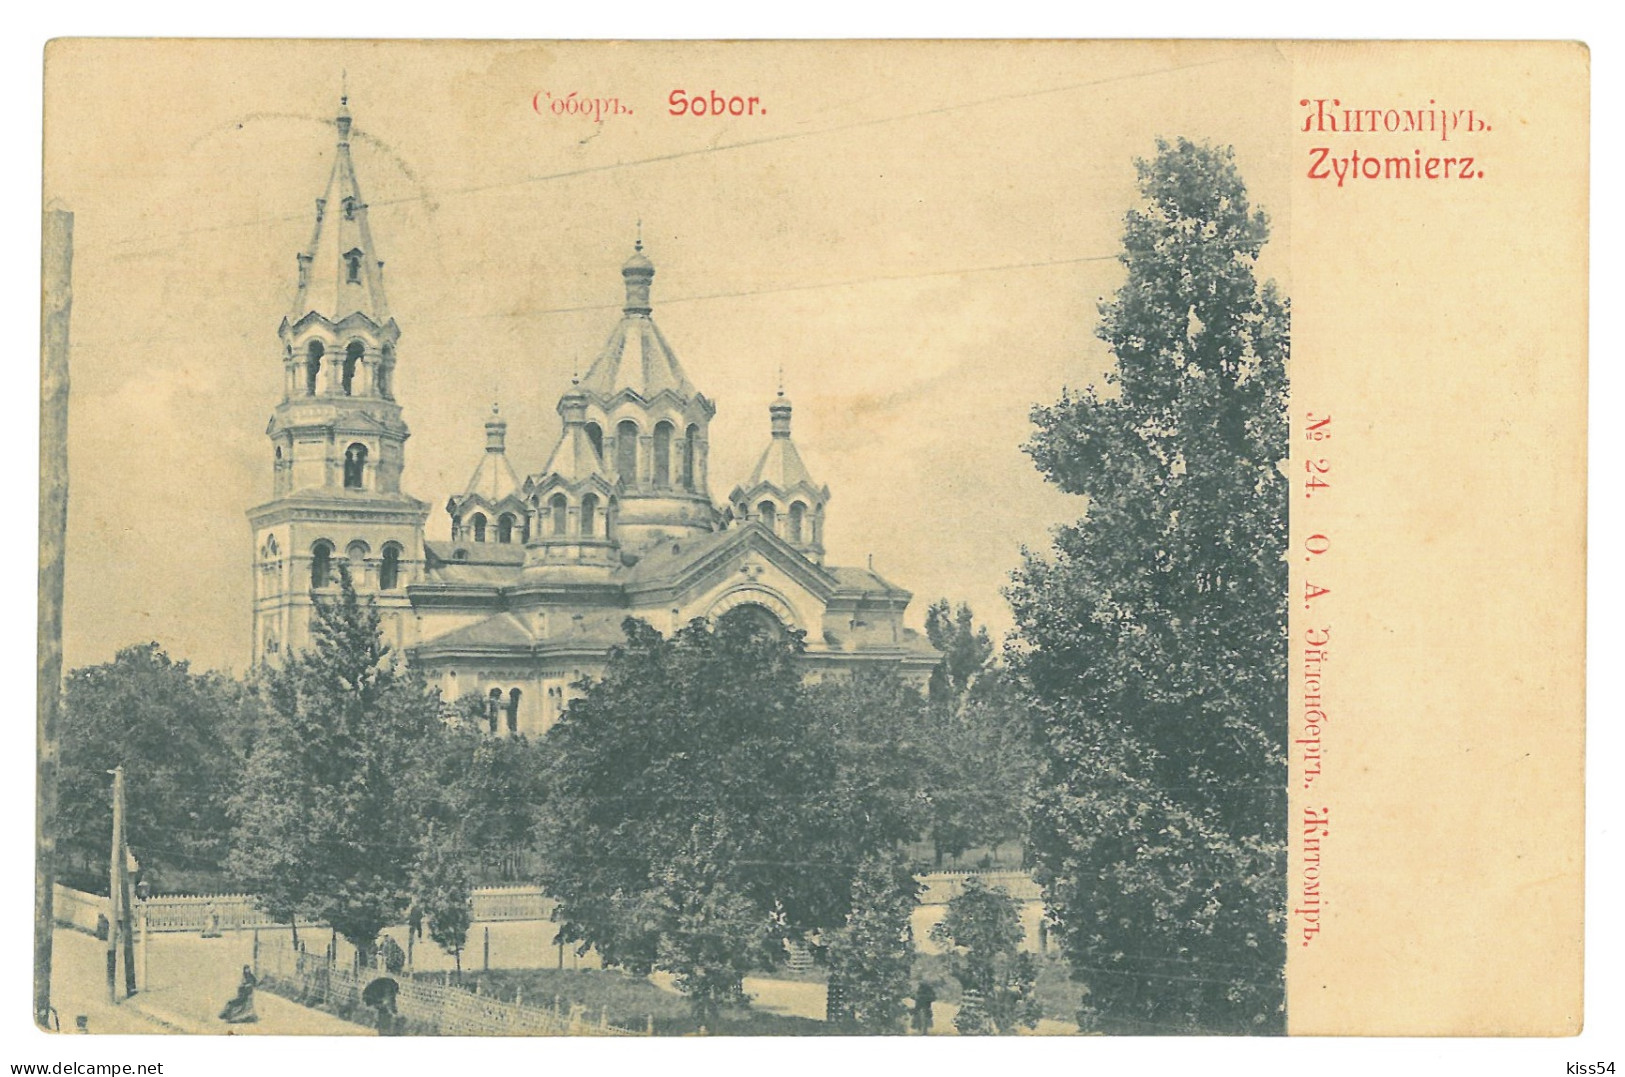 UK 40 - 17411 JITOMIR, Church, Ukraine - Old Postcard - Used - 1910 - Ukraine